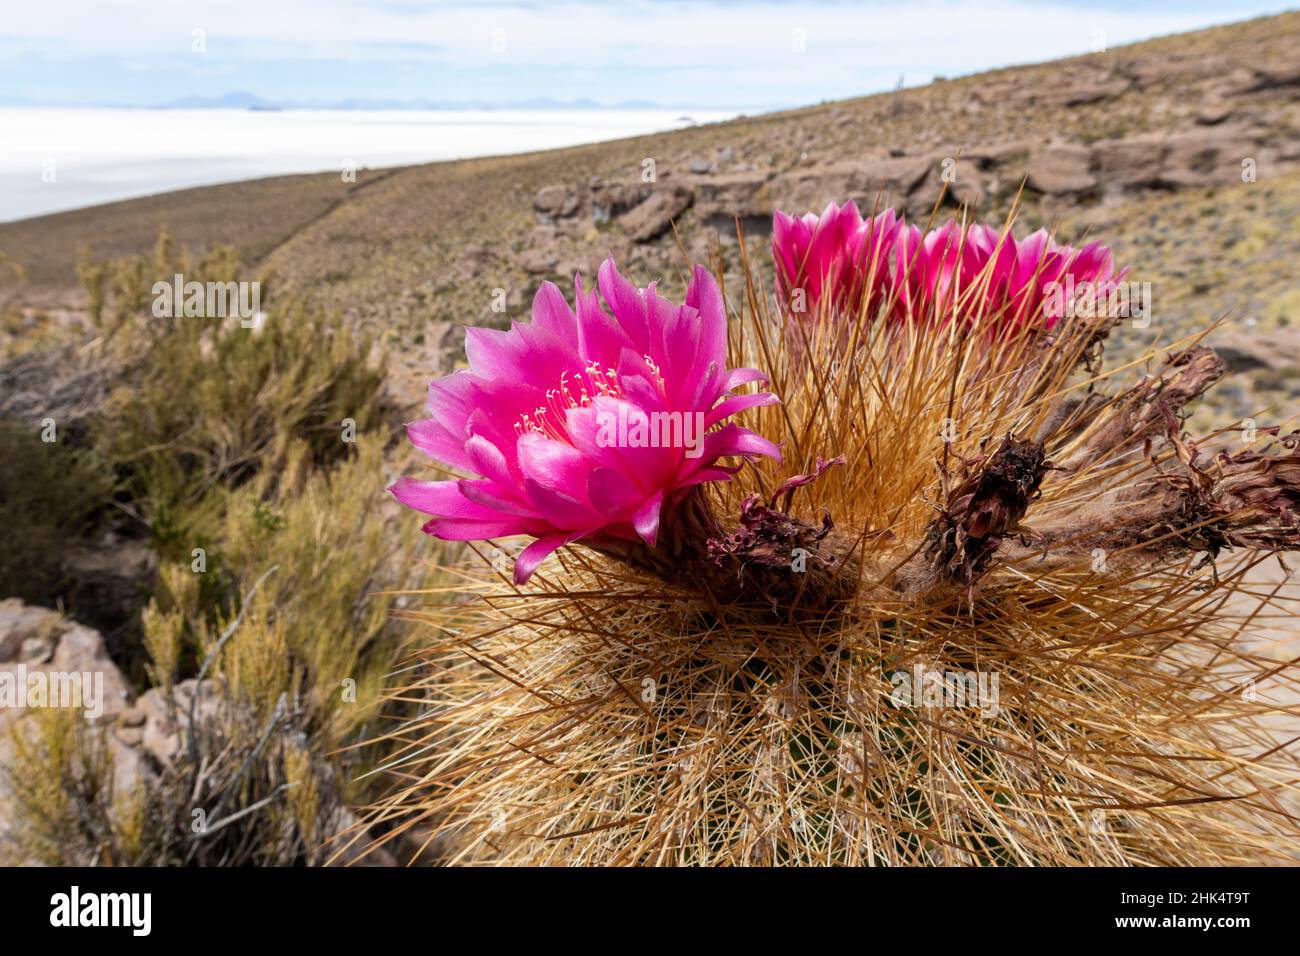 Silver torch (Cleistocactus strausii), flowering near the salt flats in Salar de Uyuni, Bolivia, South America Stock Photo